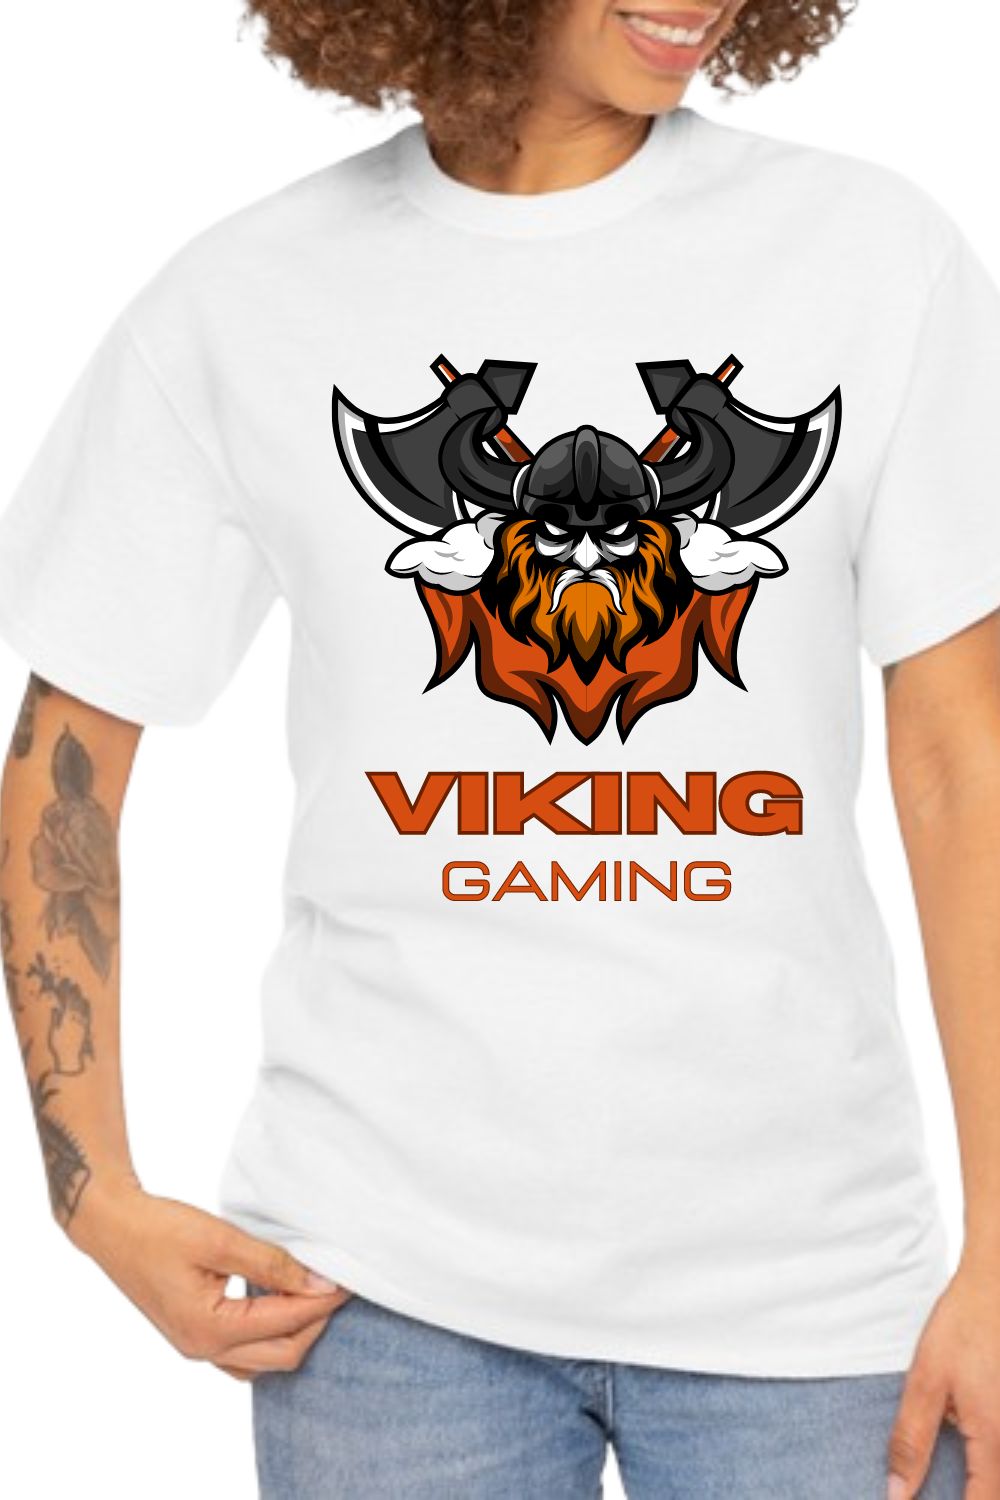 Viking Game design pinterest preview image.